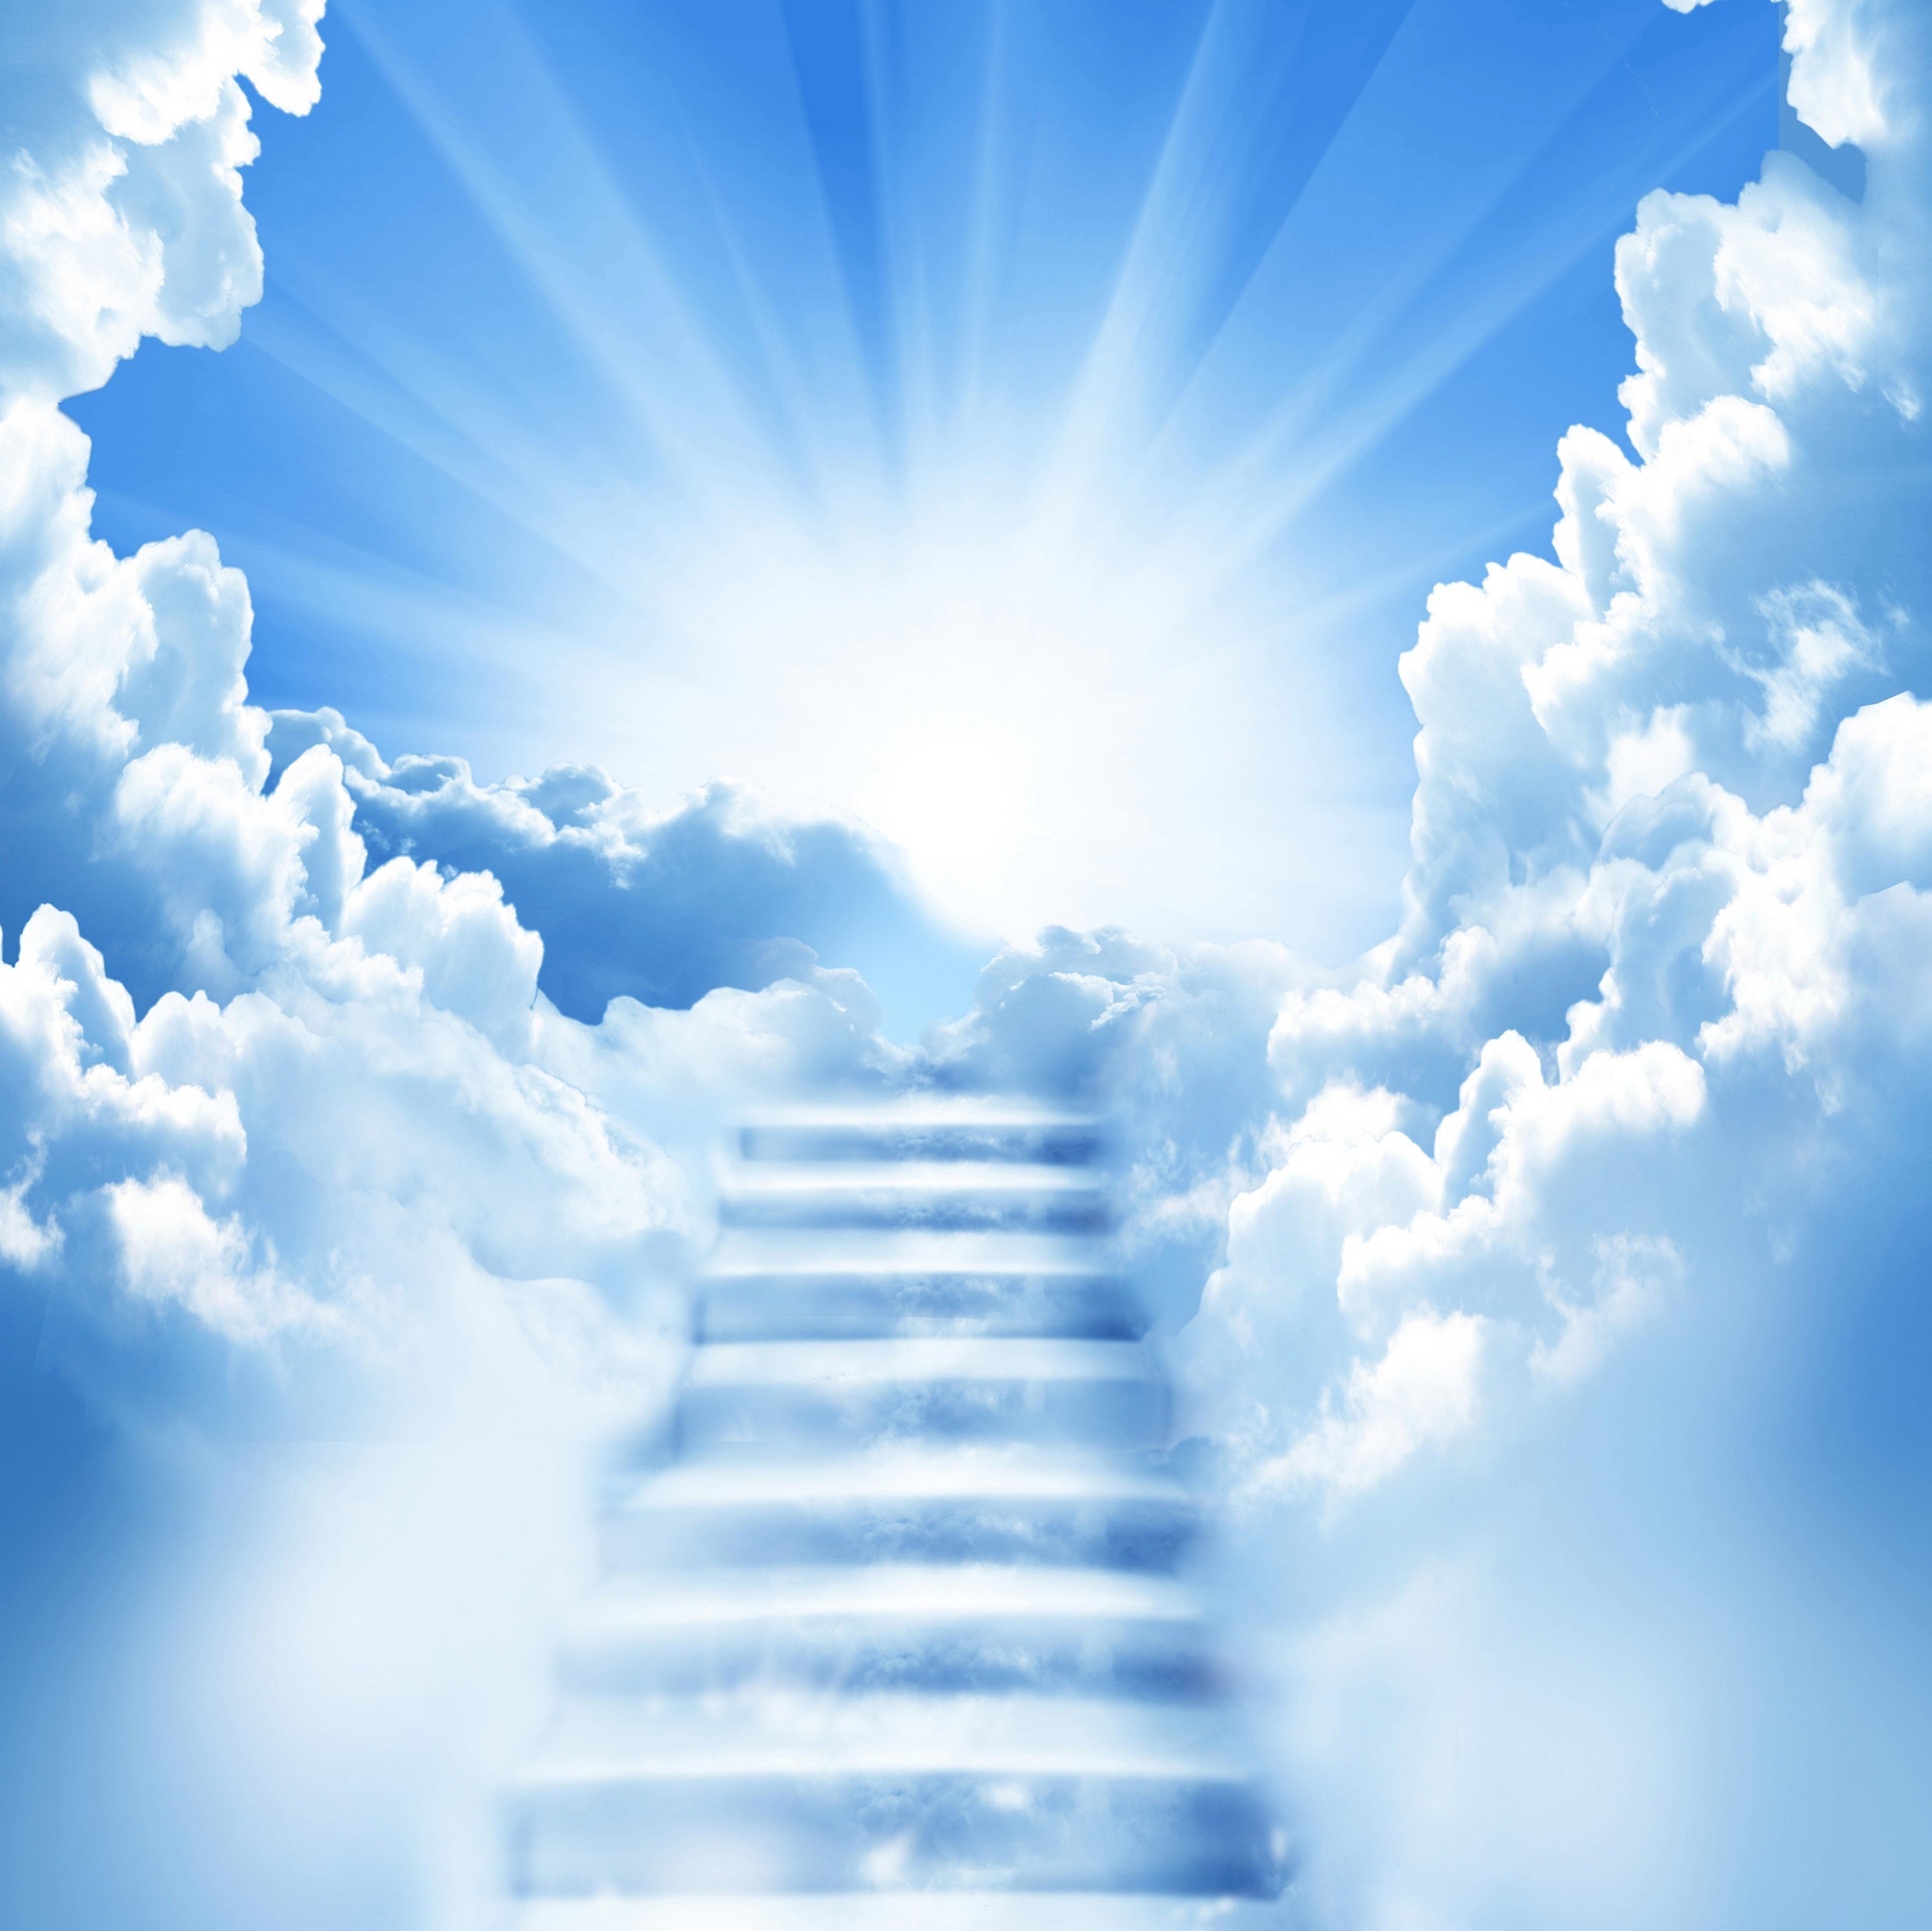 Stairway To Heaven Wallpaper